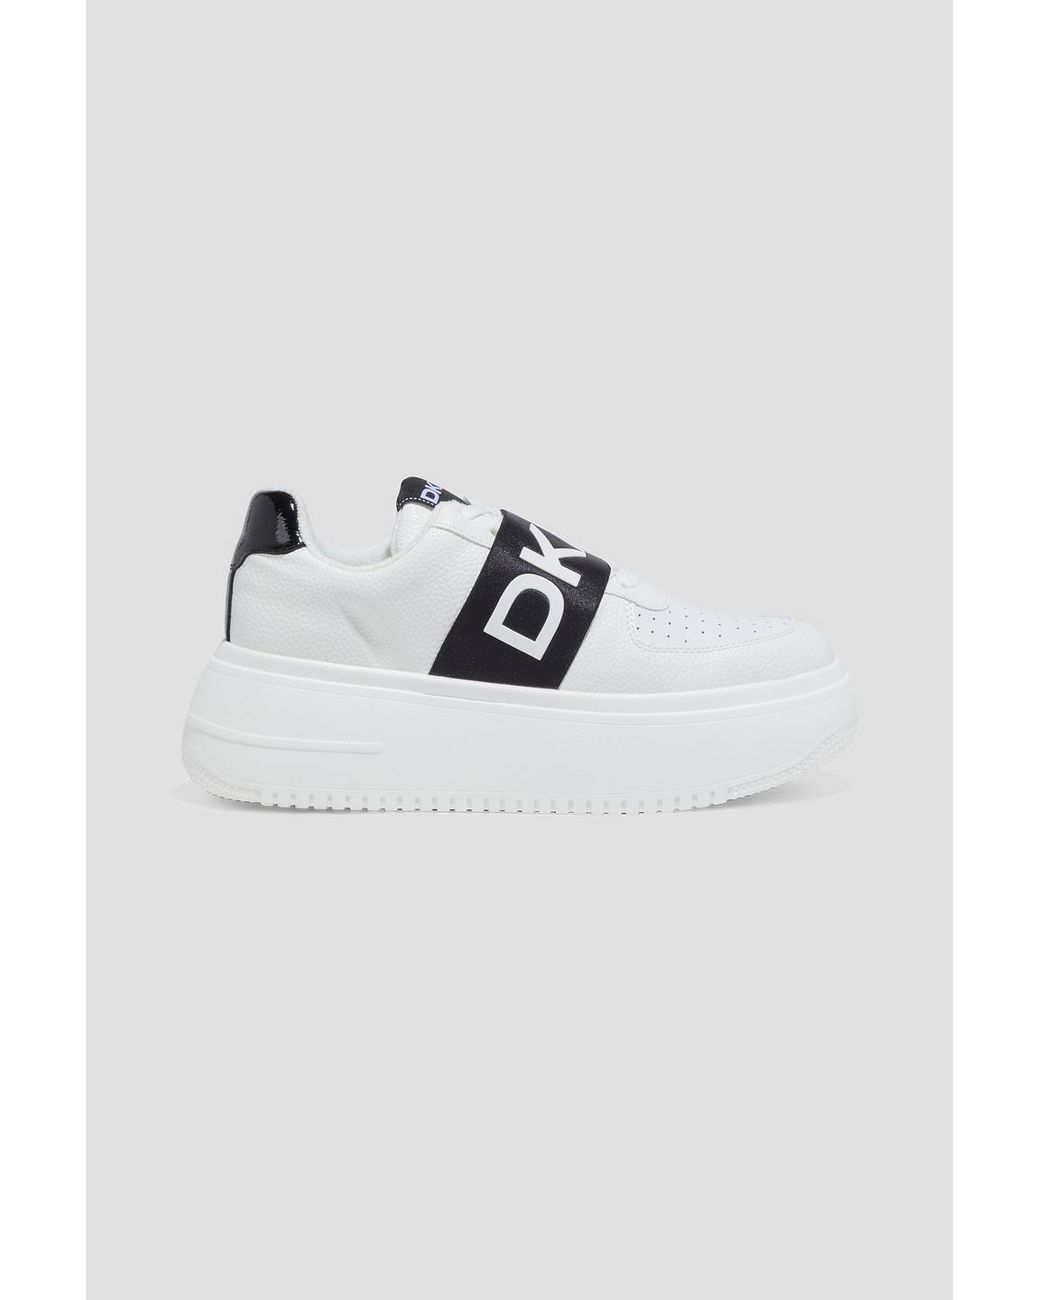 DKNY Bari Platform Sneakers - Macy's